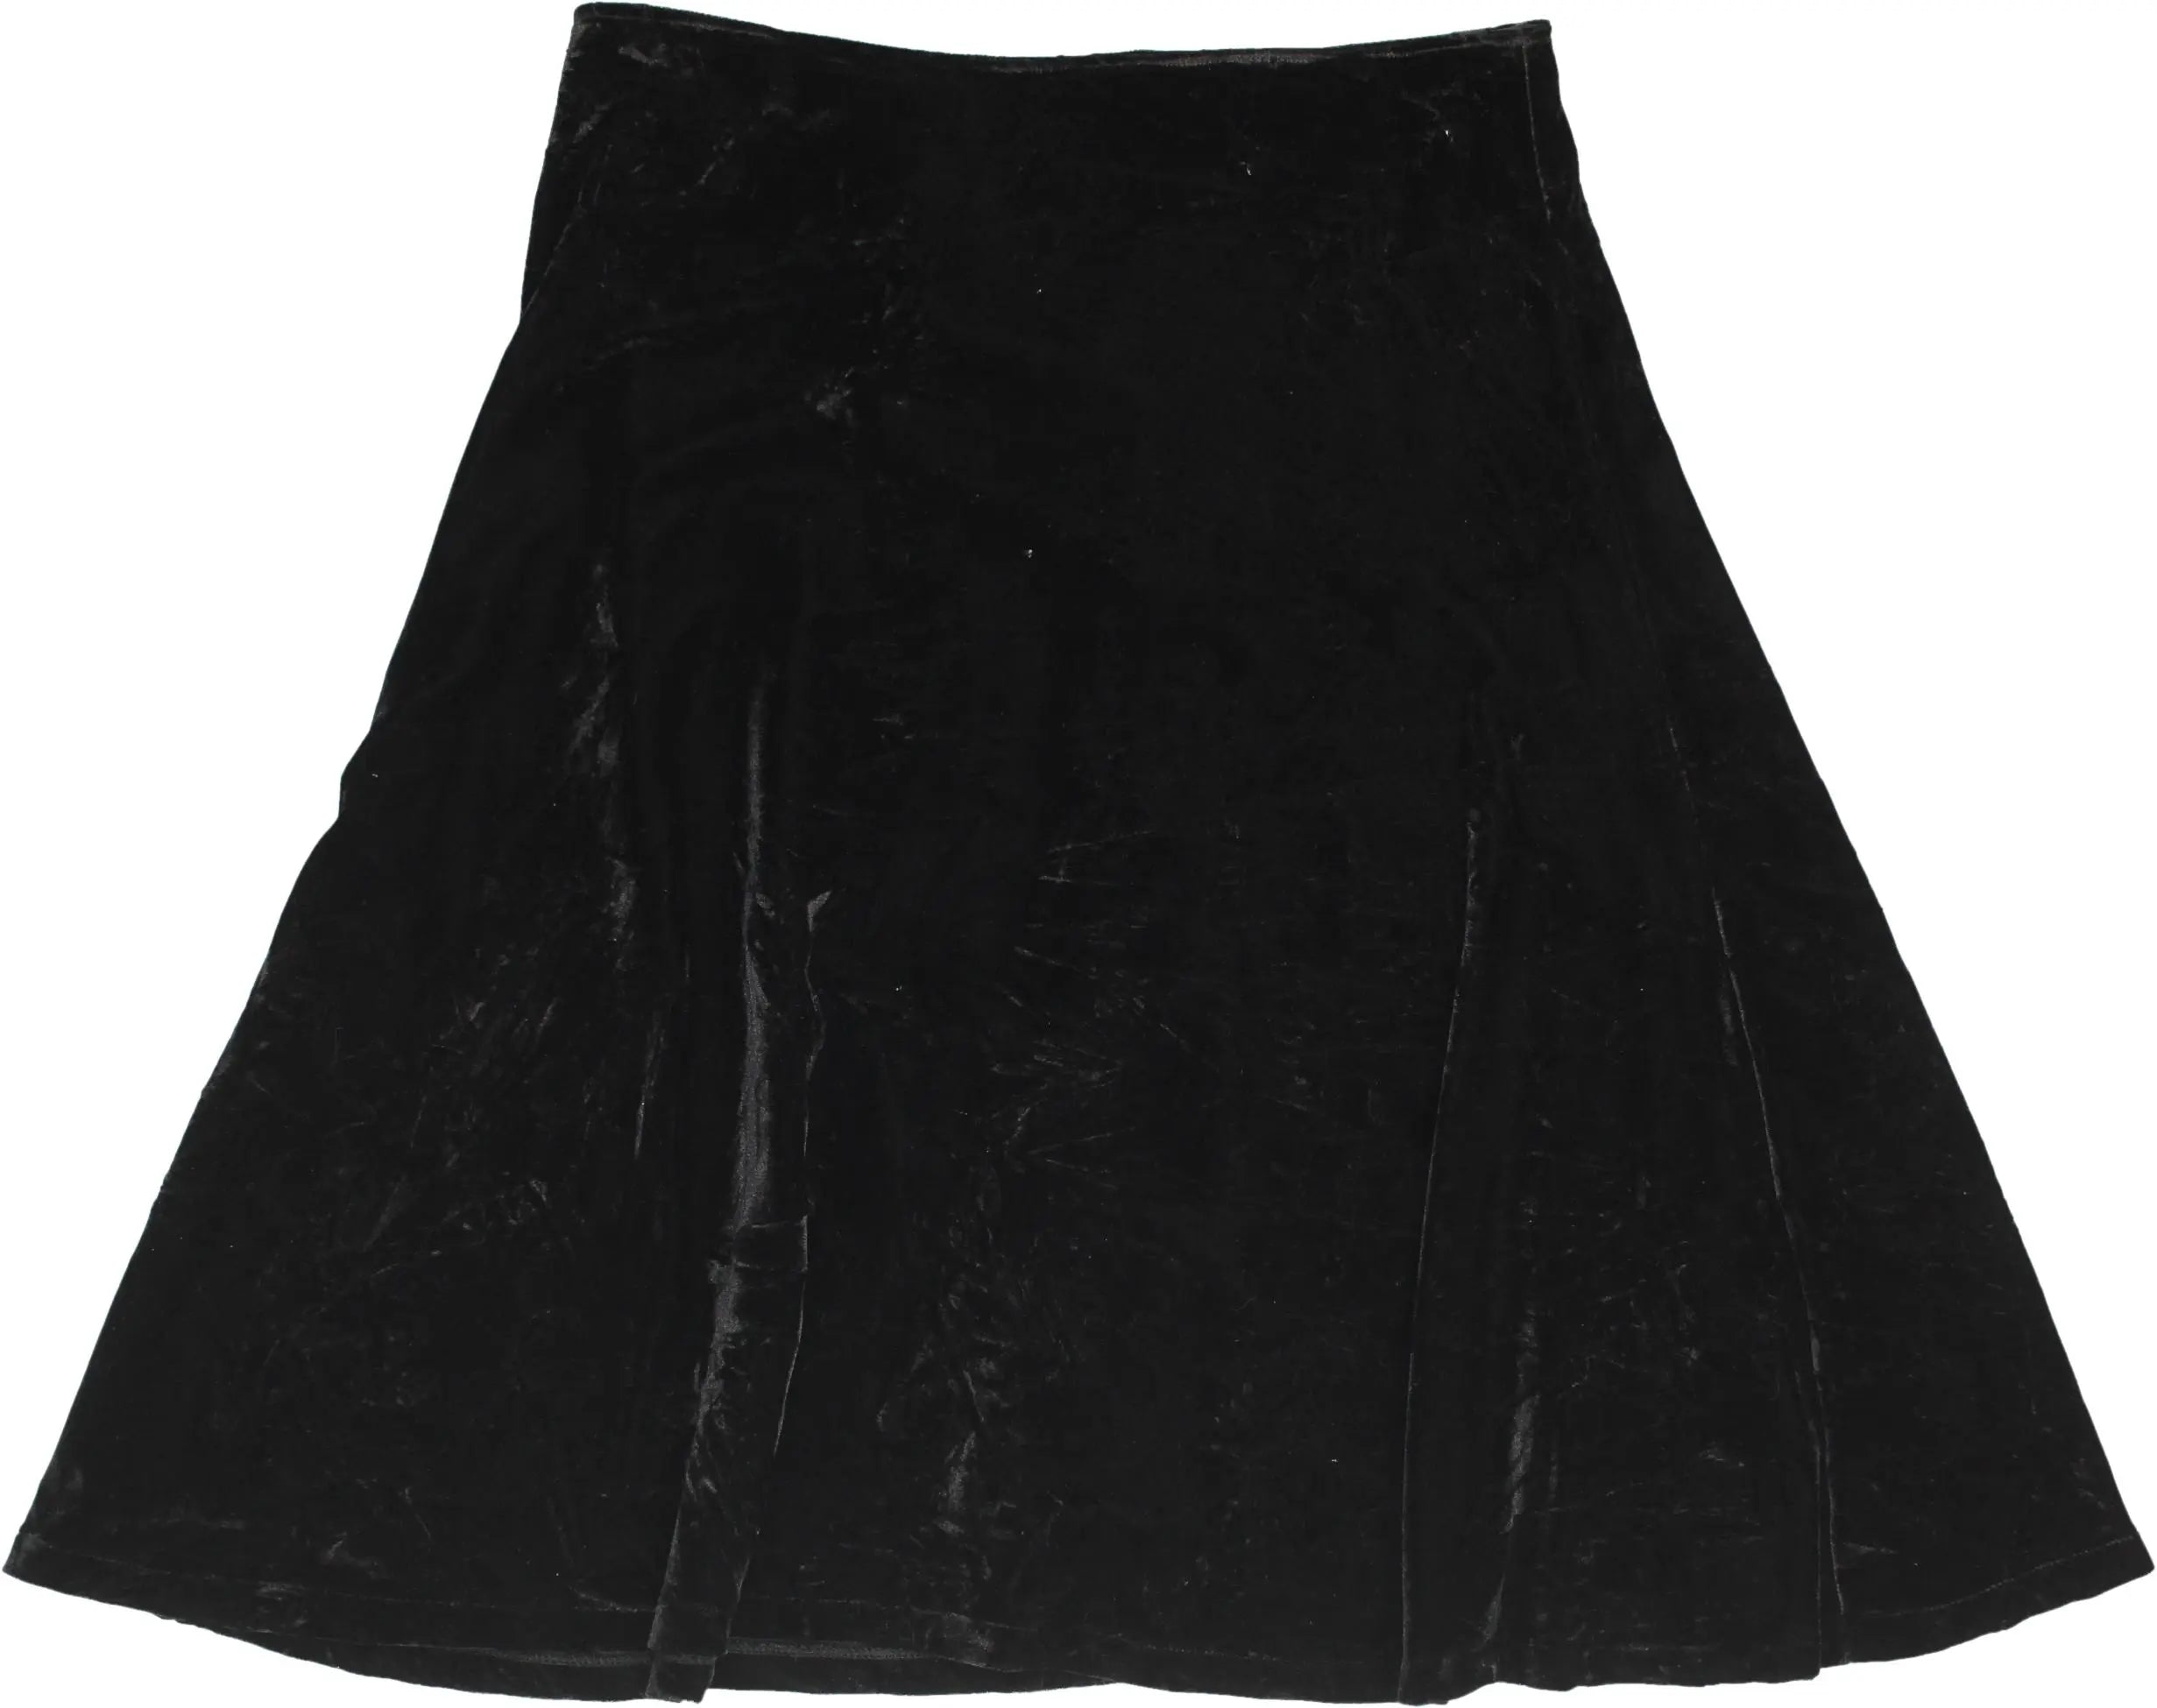 Reilmans - Velvet Skirt- ThriftTale.com - Vintage and second handclothing